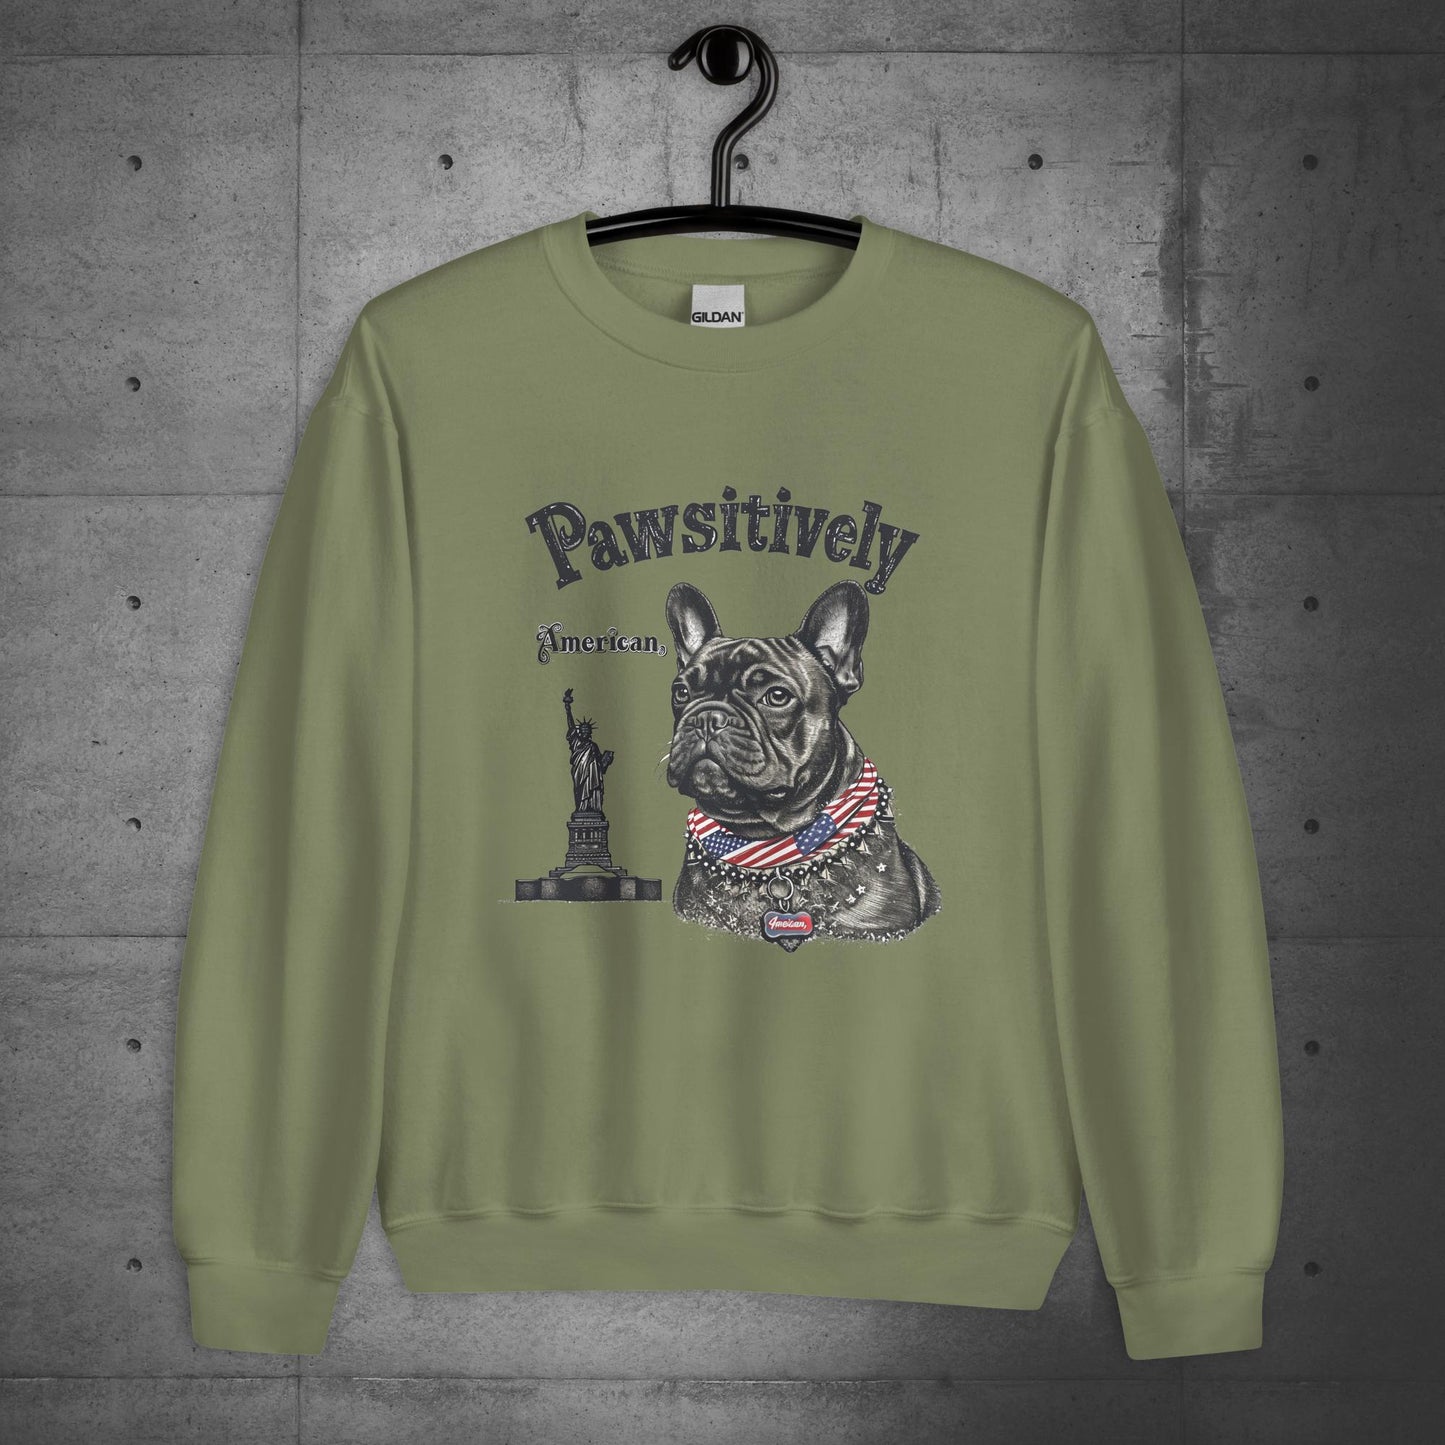 Unisex "Pawsitively American" French Bulldog Sweater/Sweatshirt